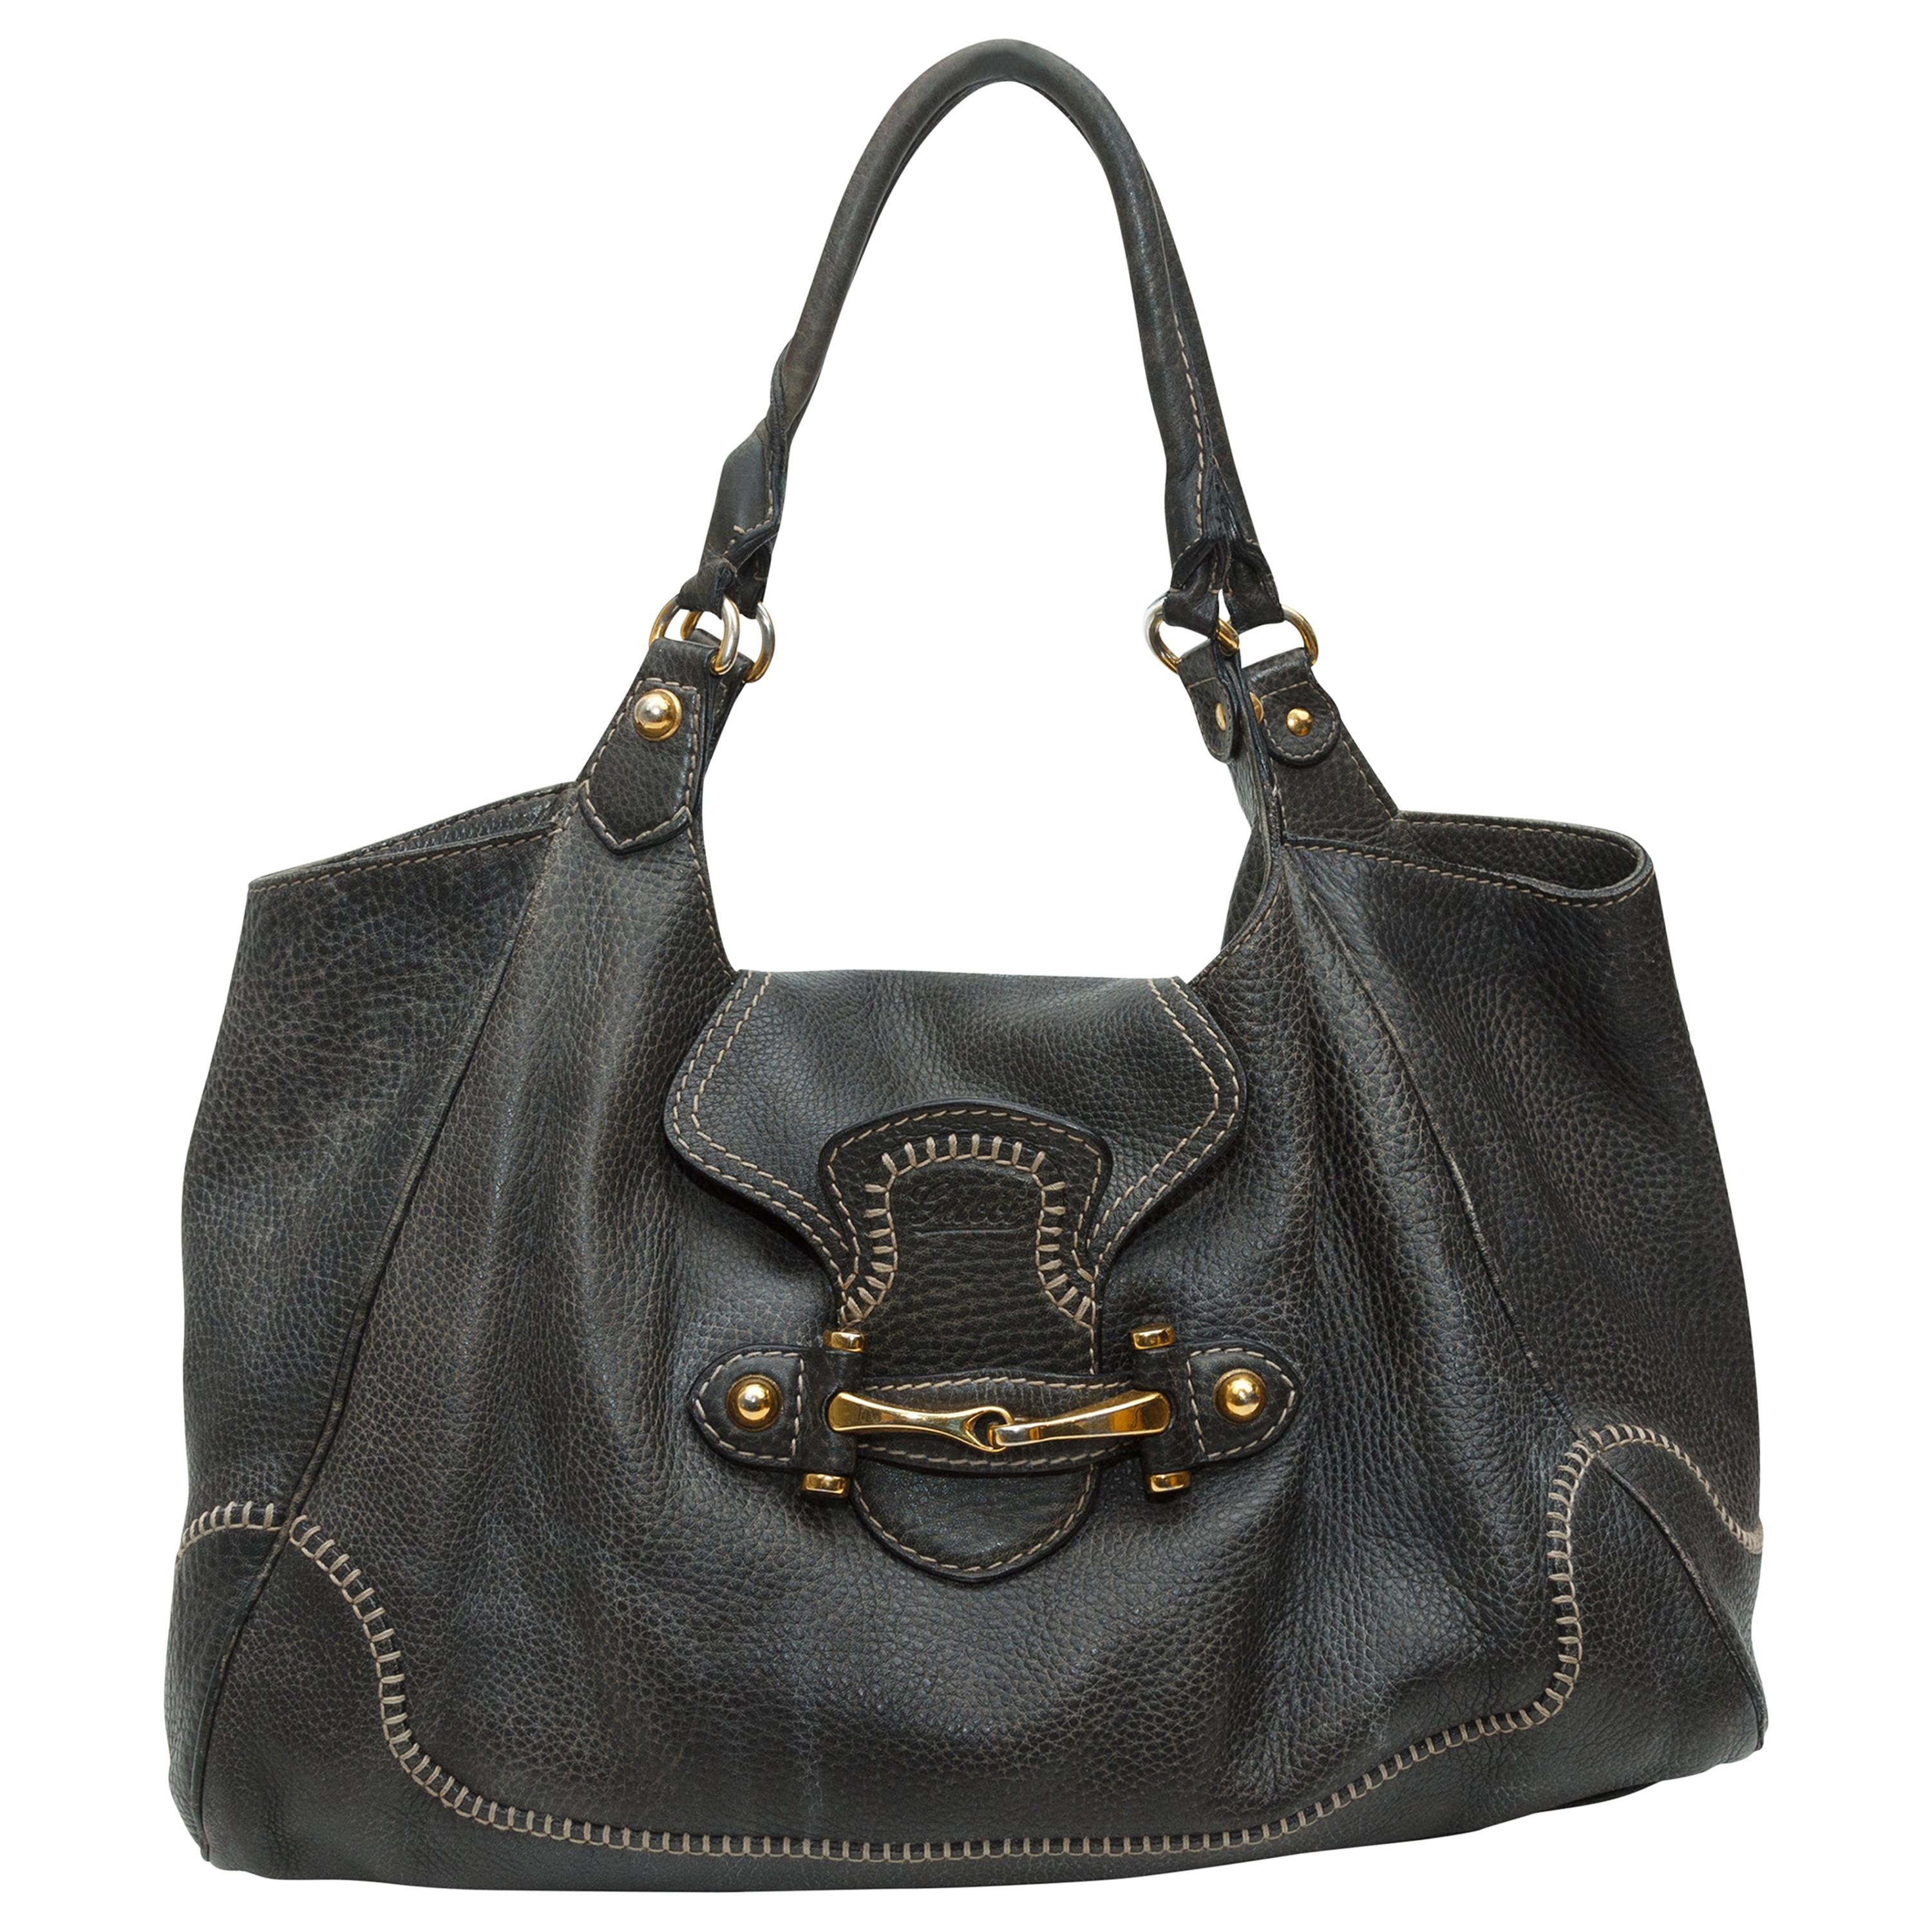 Gucci Charcoal Leather Horsebit Handbag